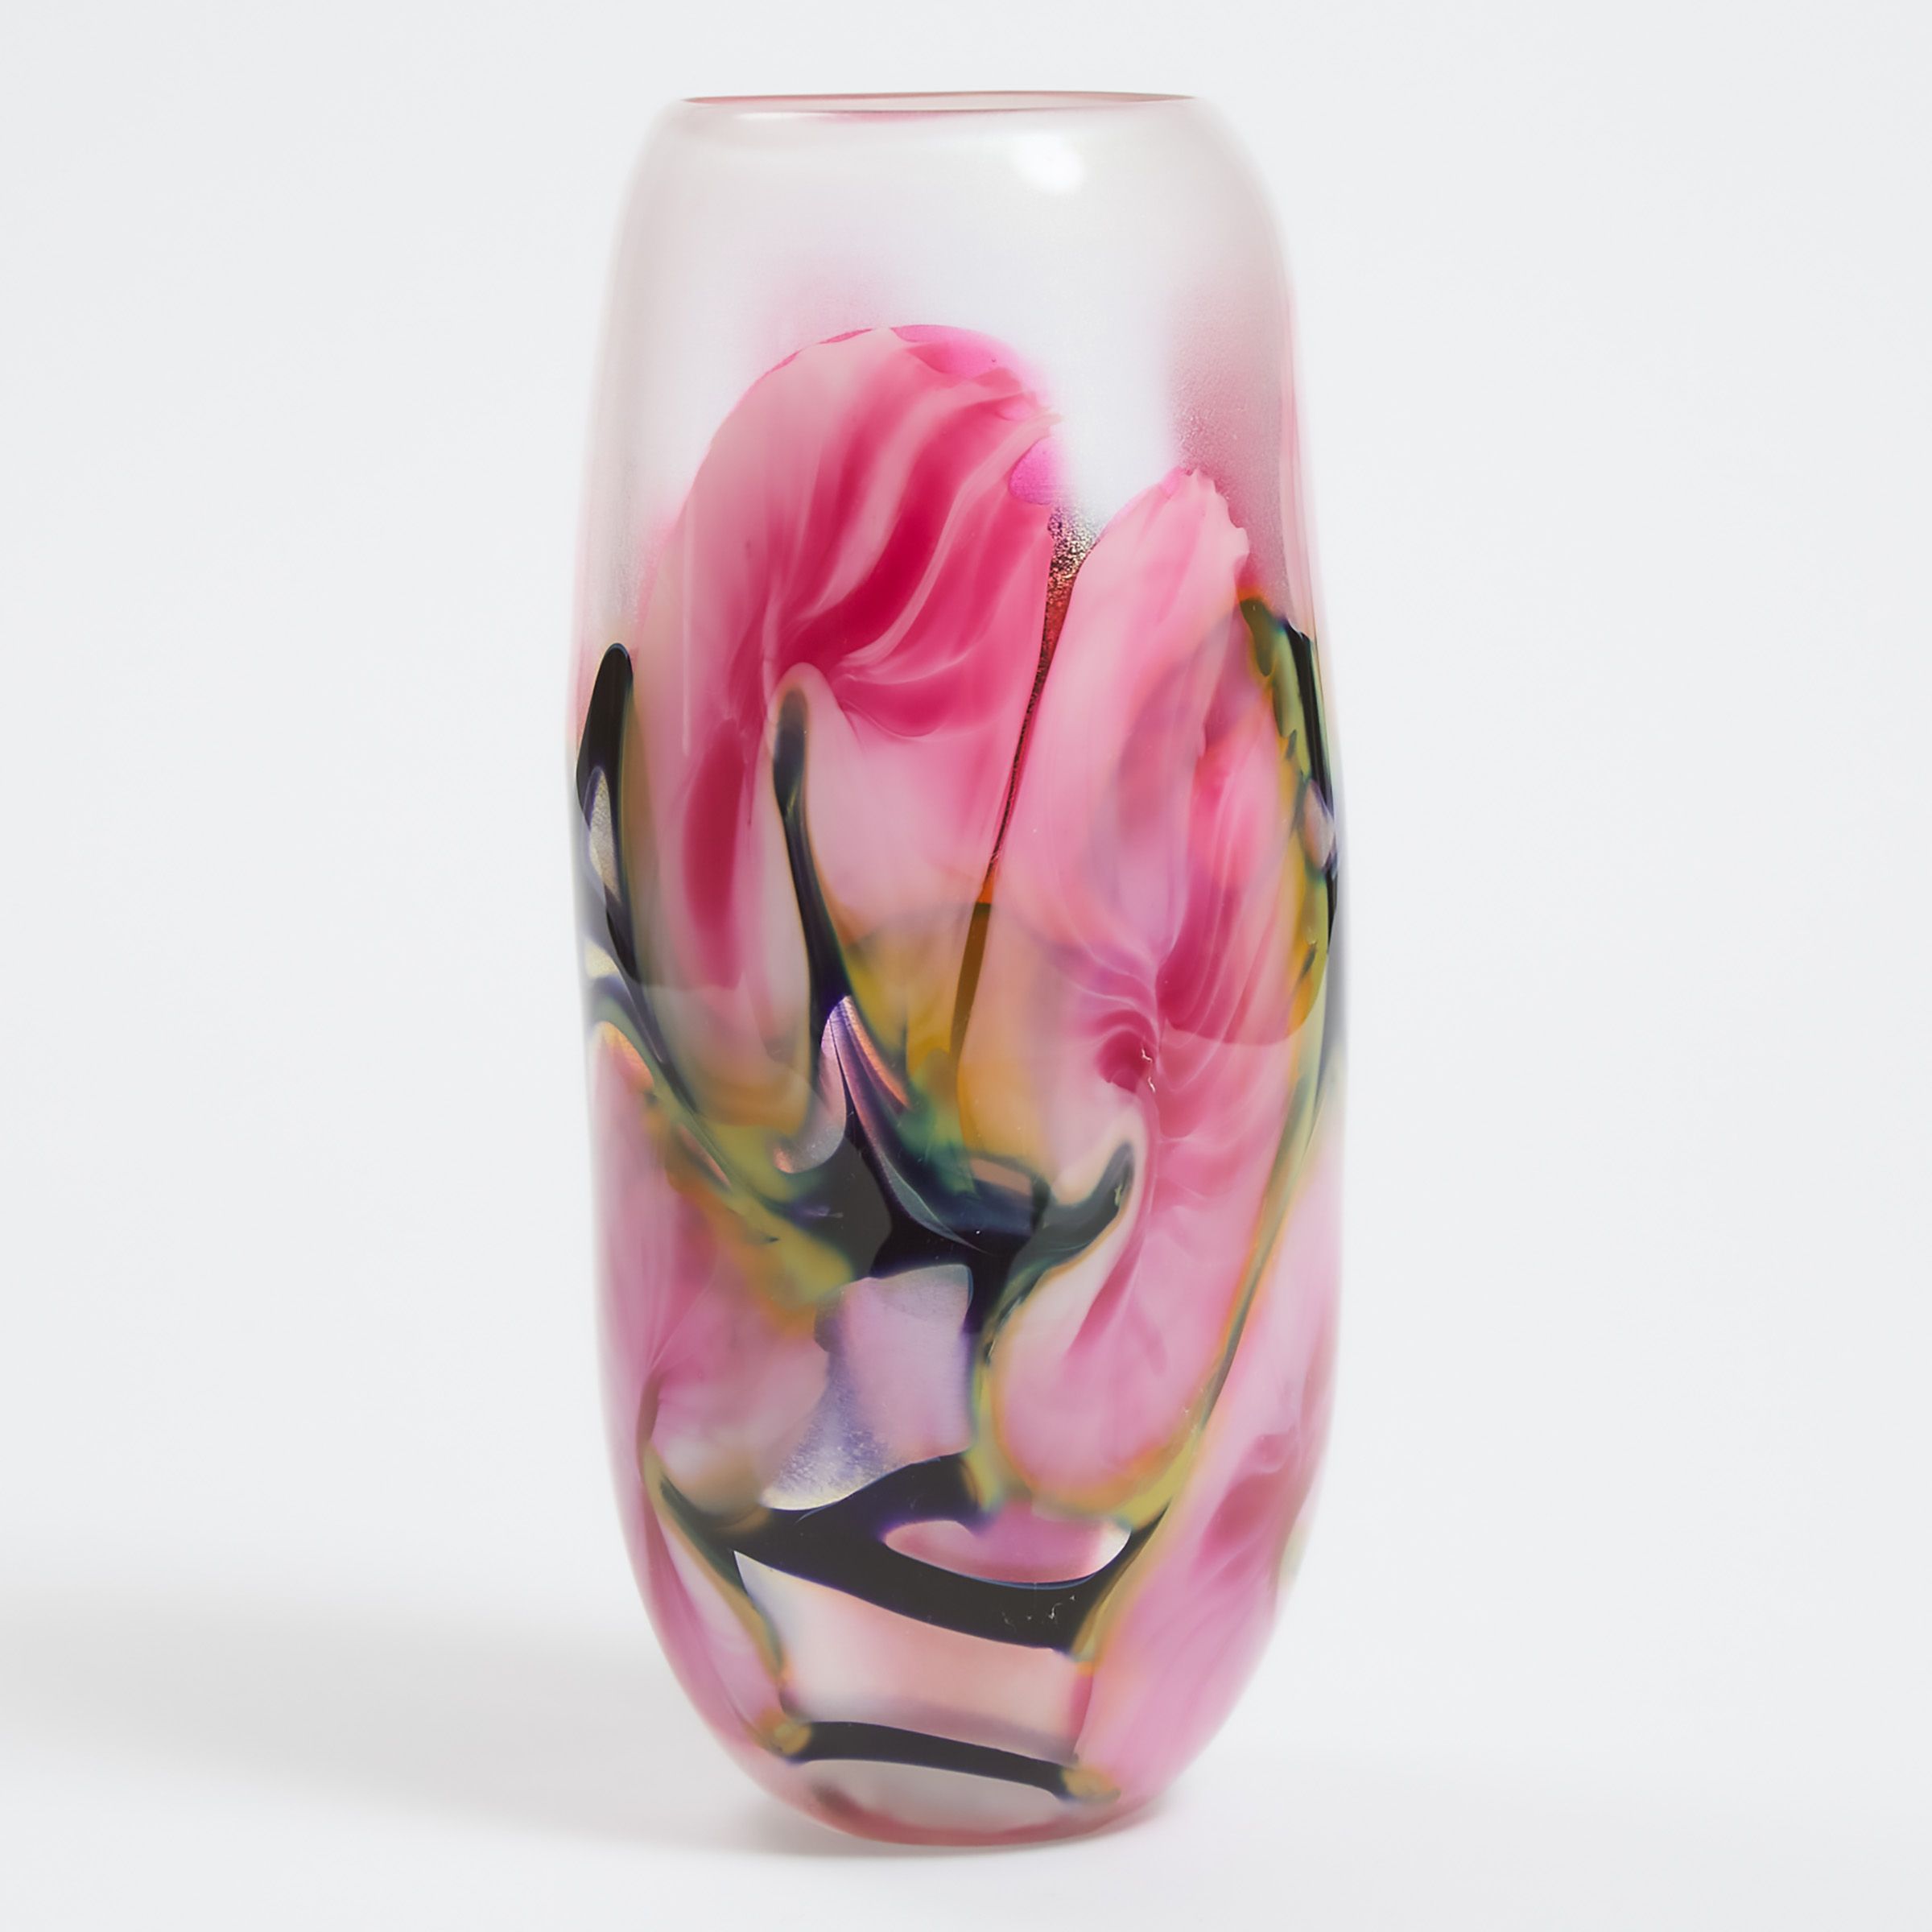 John Lotton (American, b.1964), Floral Iridescent Glass Vase, 1988